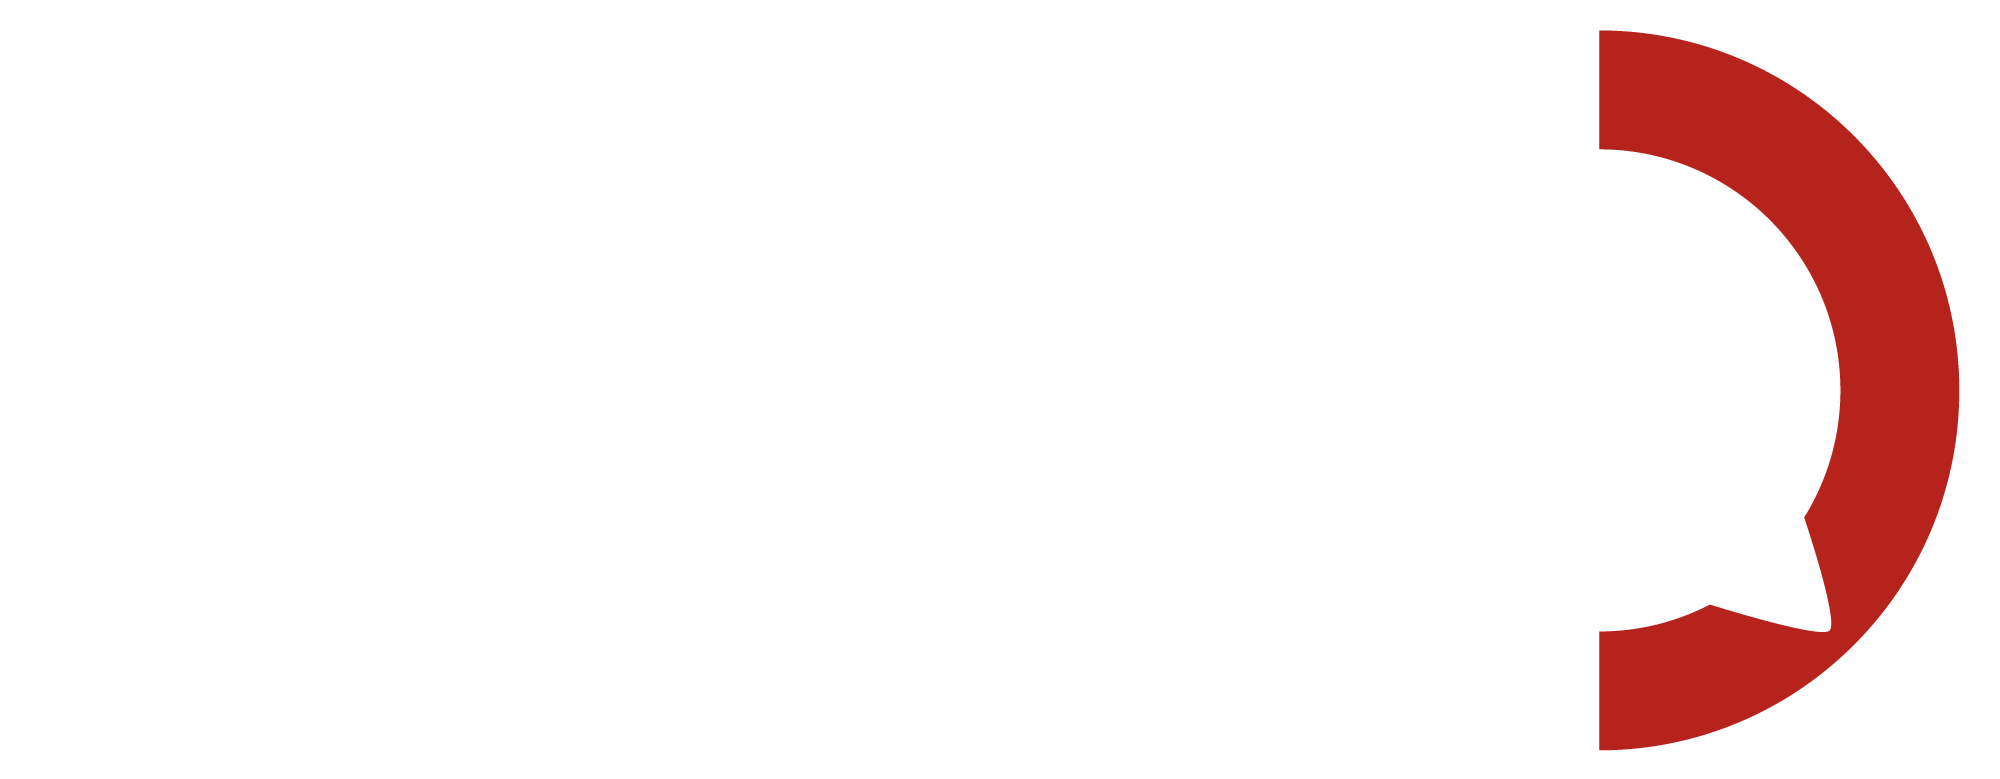 rolinger-2